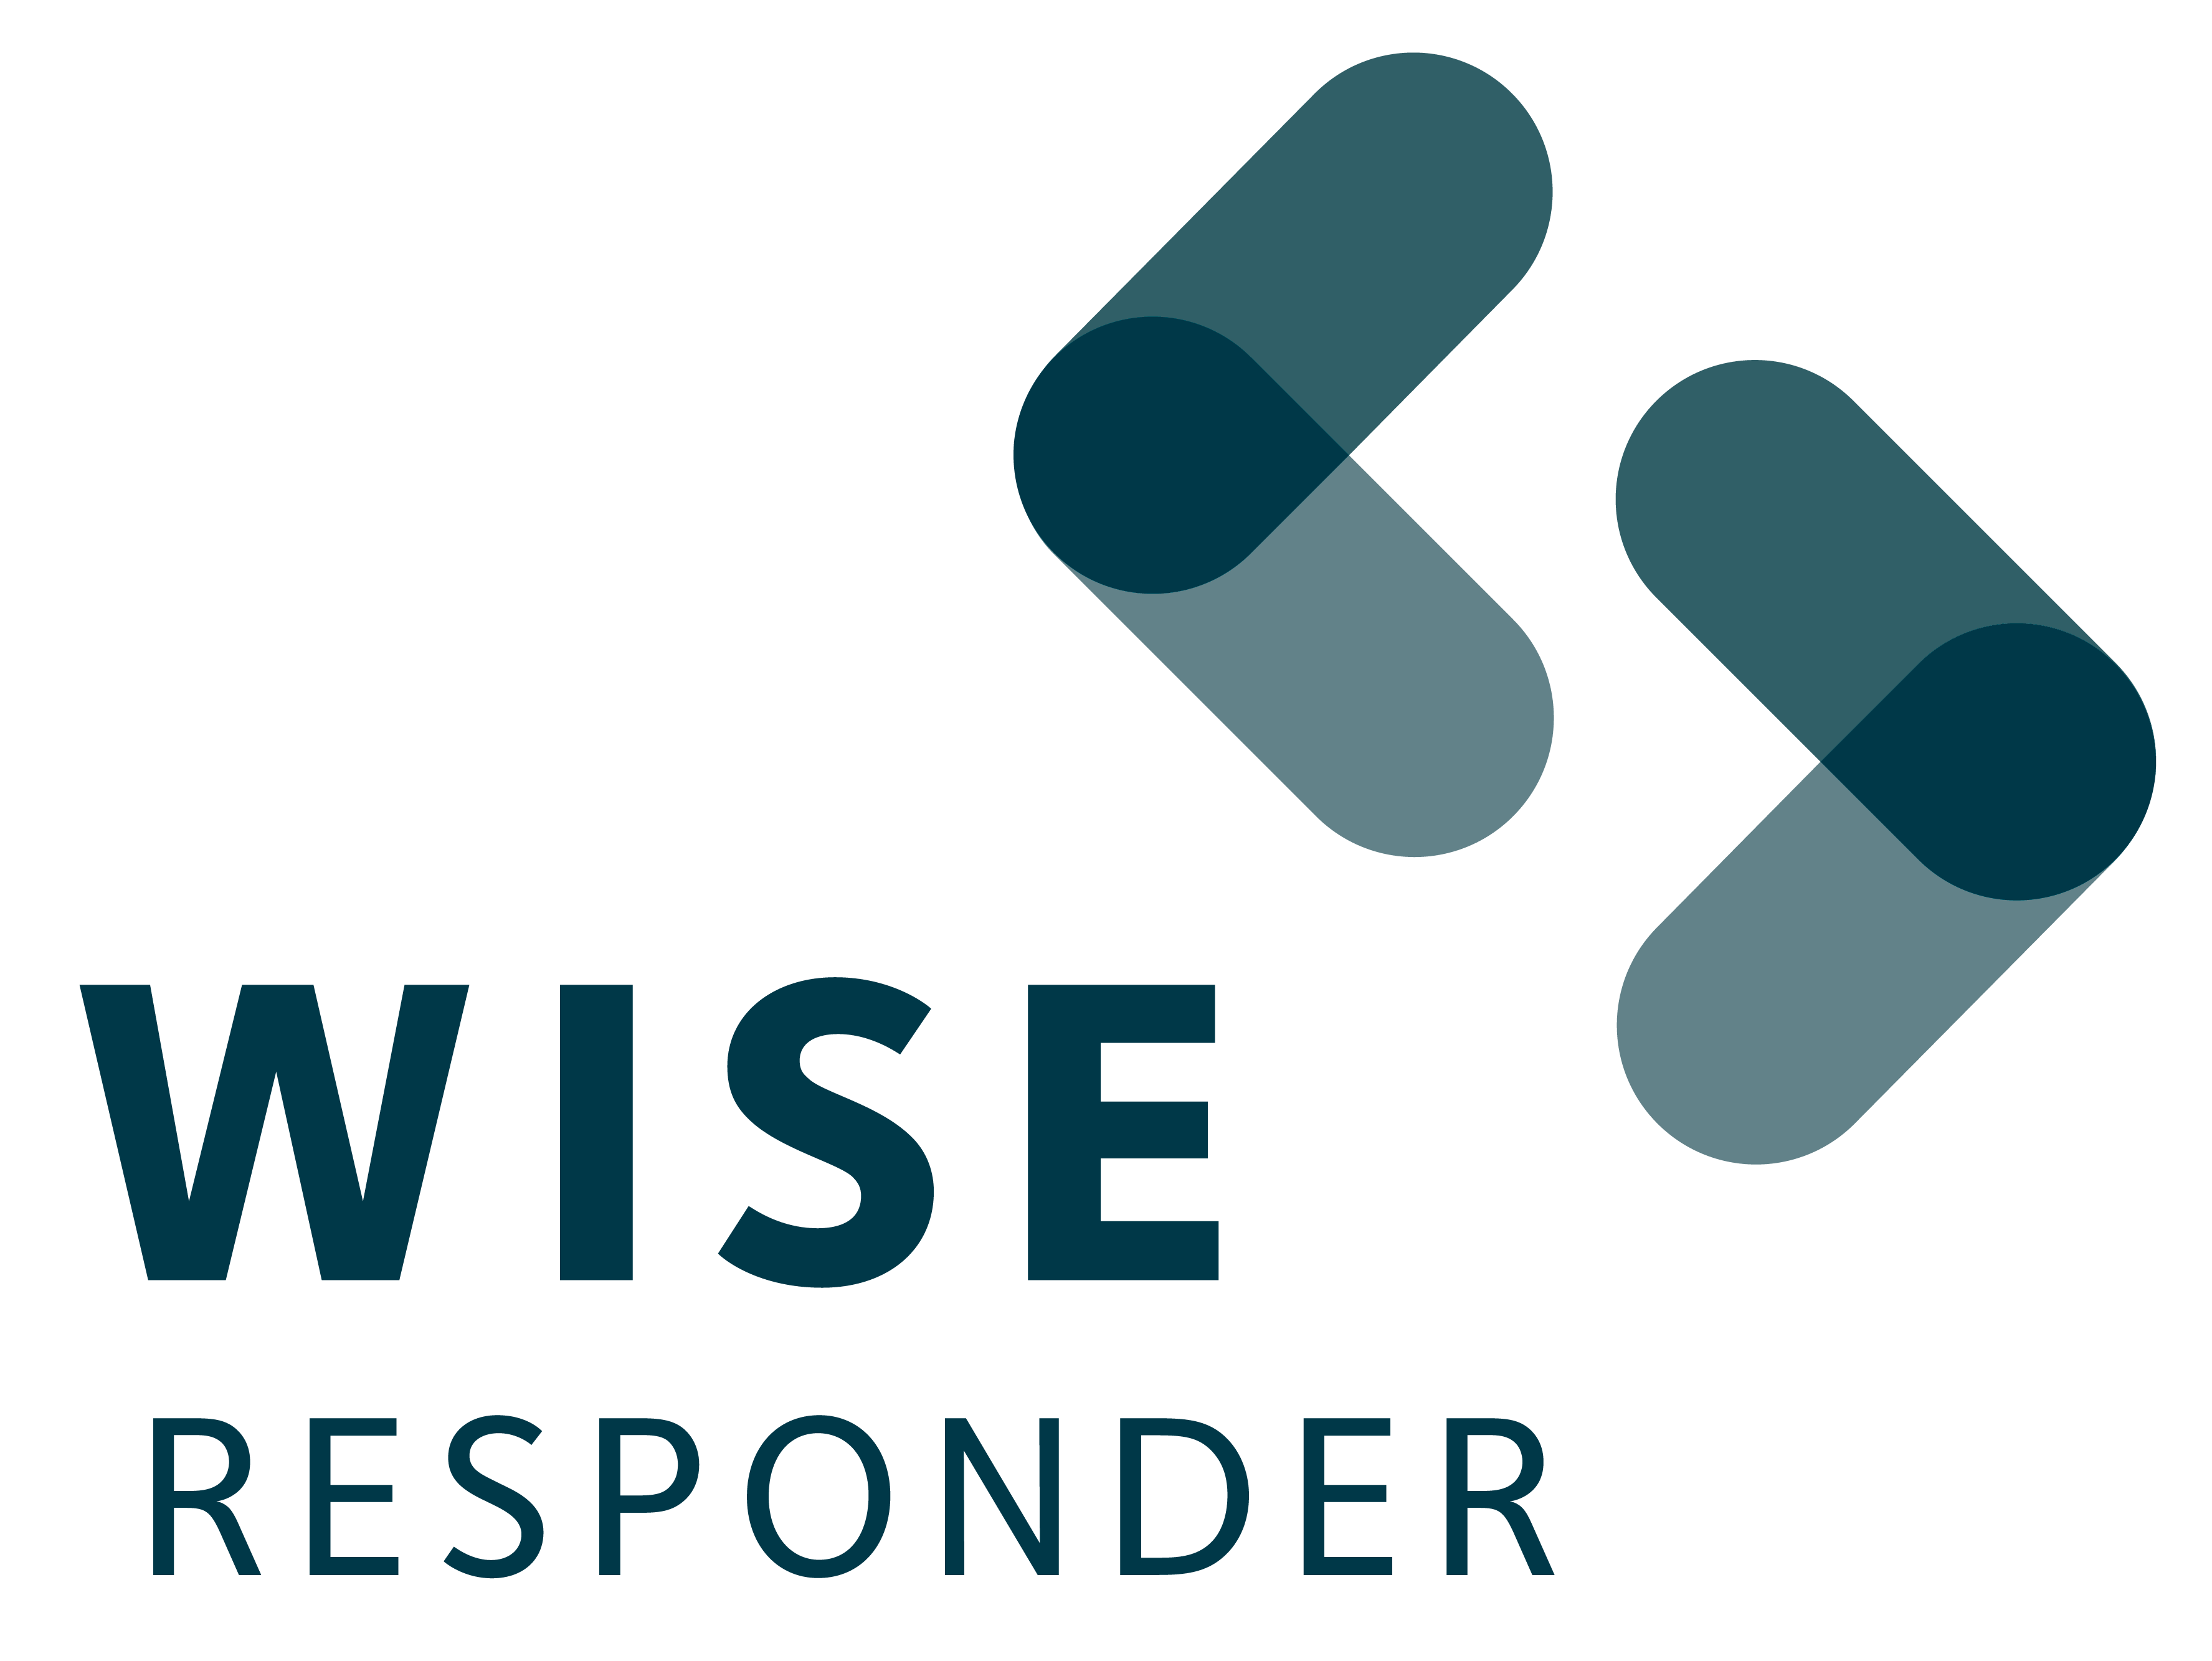 Wise responder logo